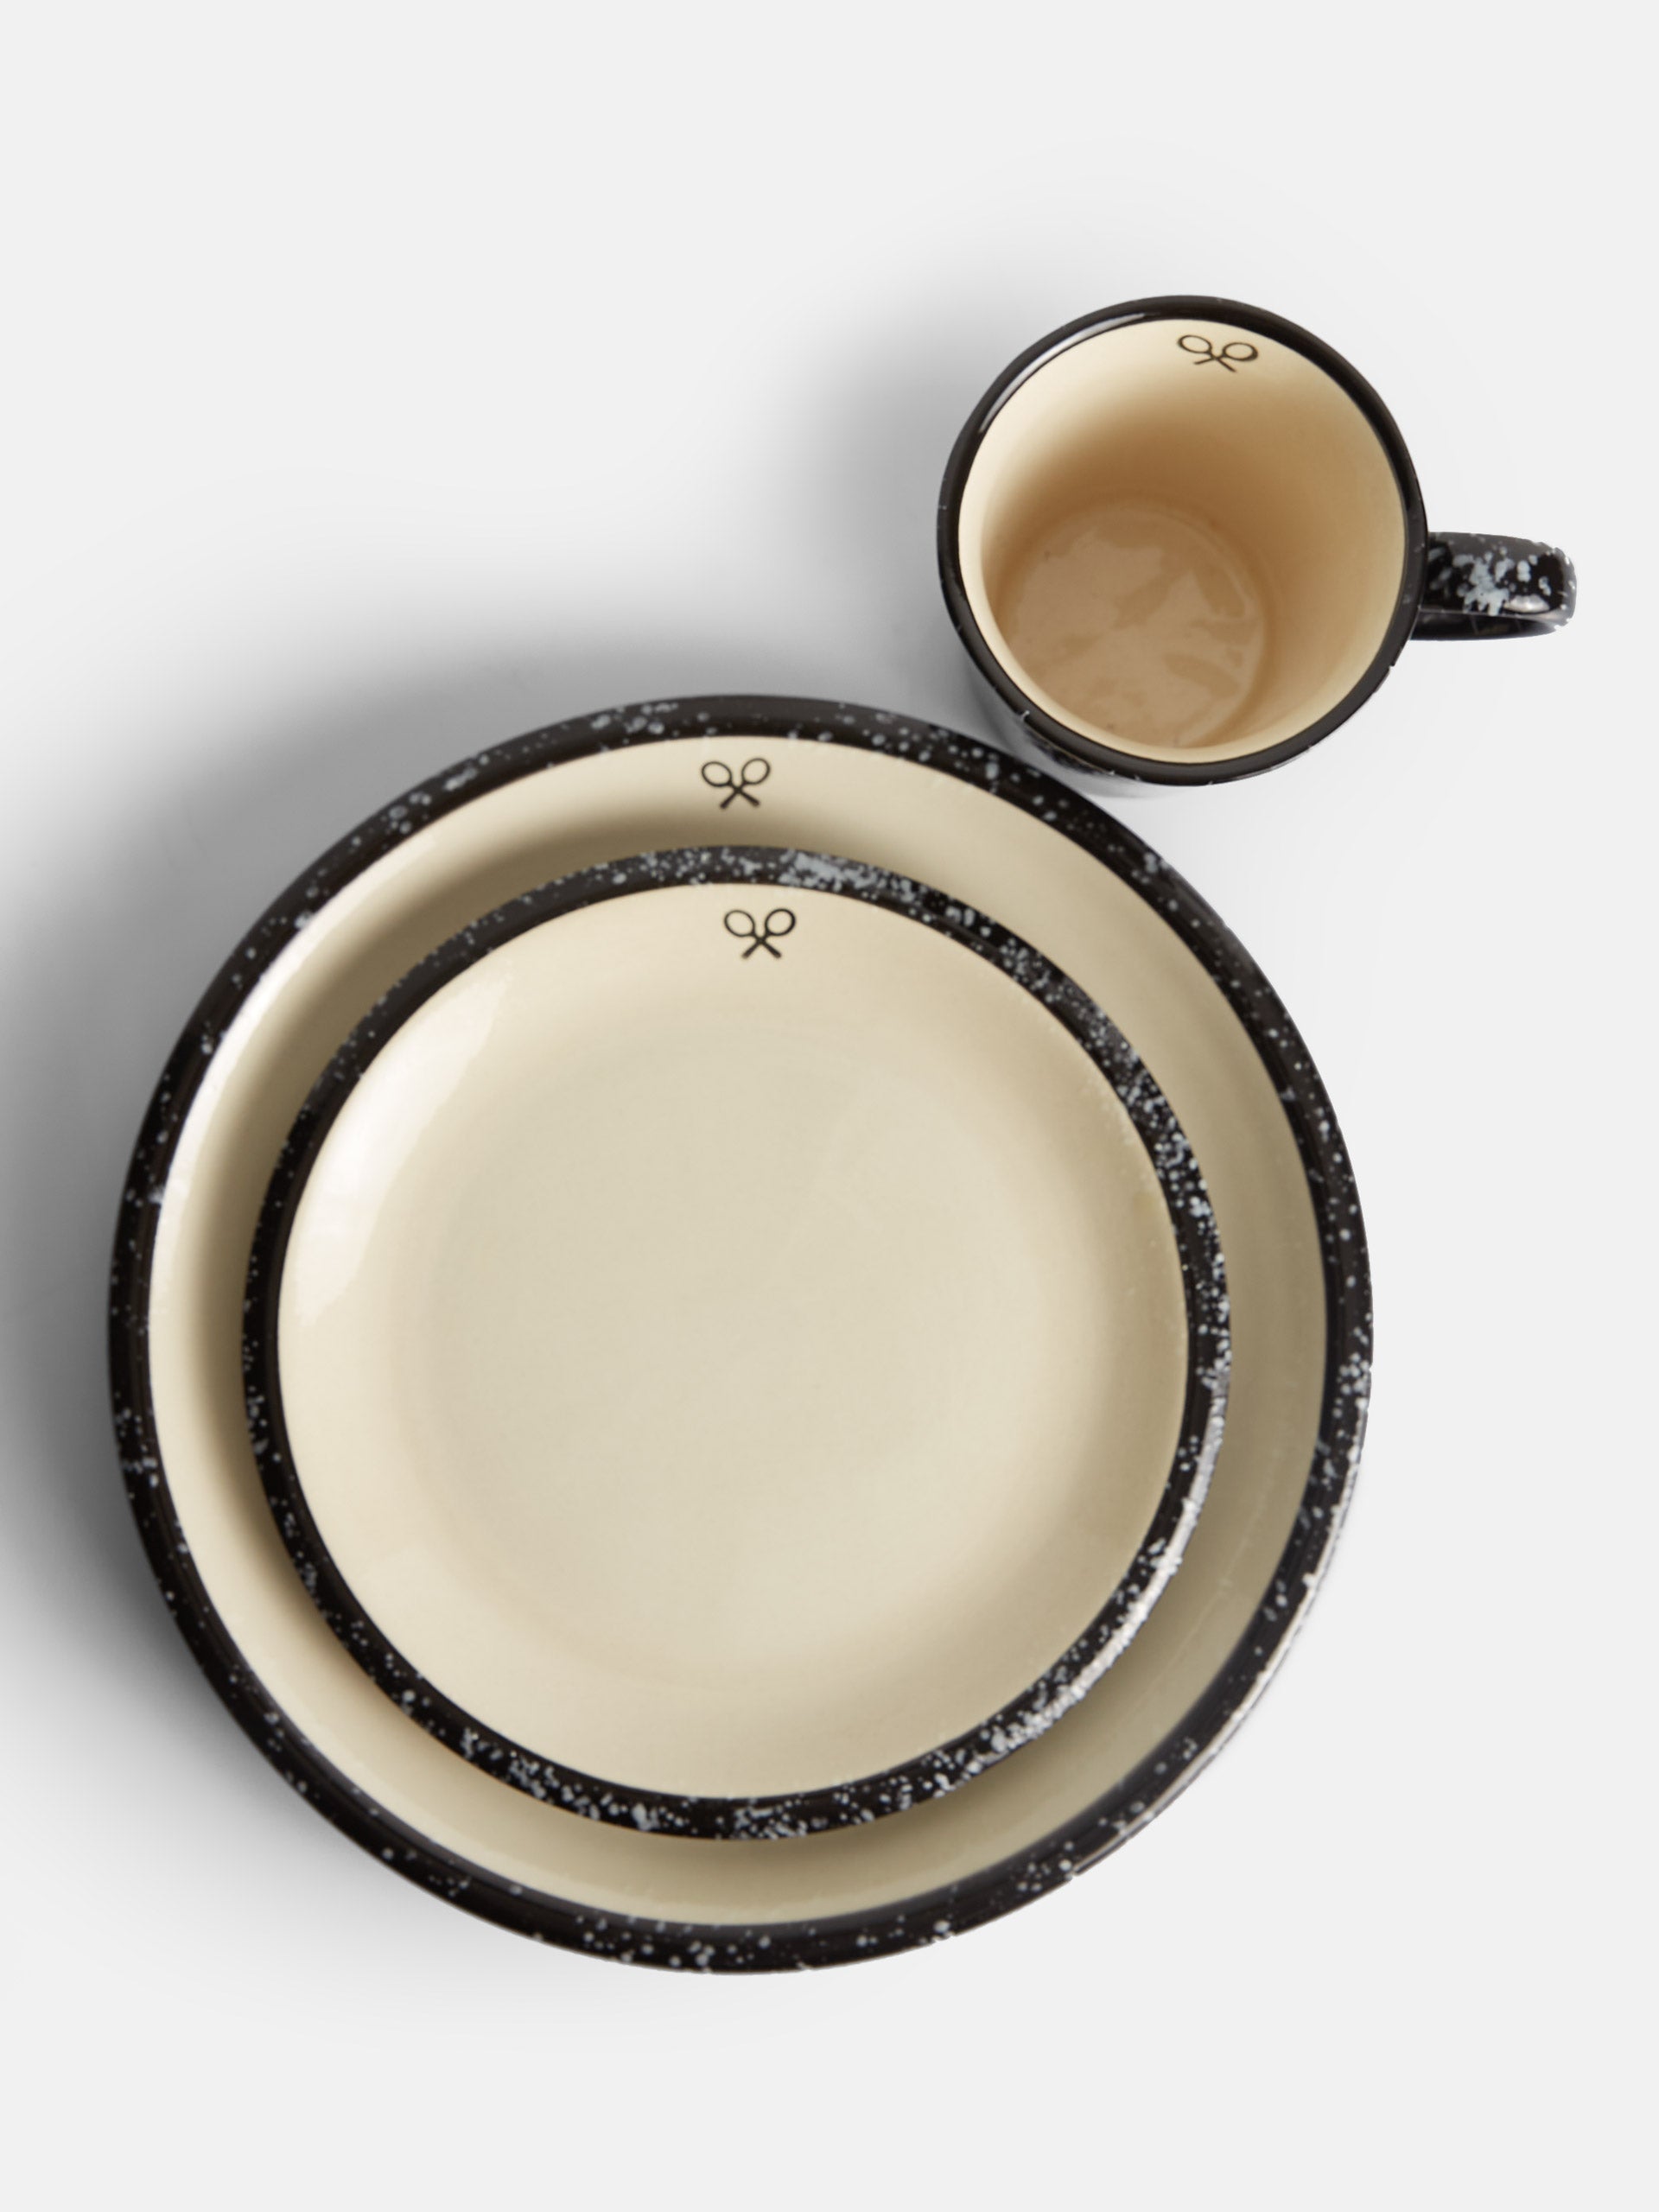 Two-tone enamel ceramic mug